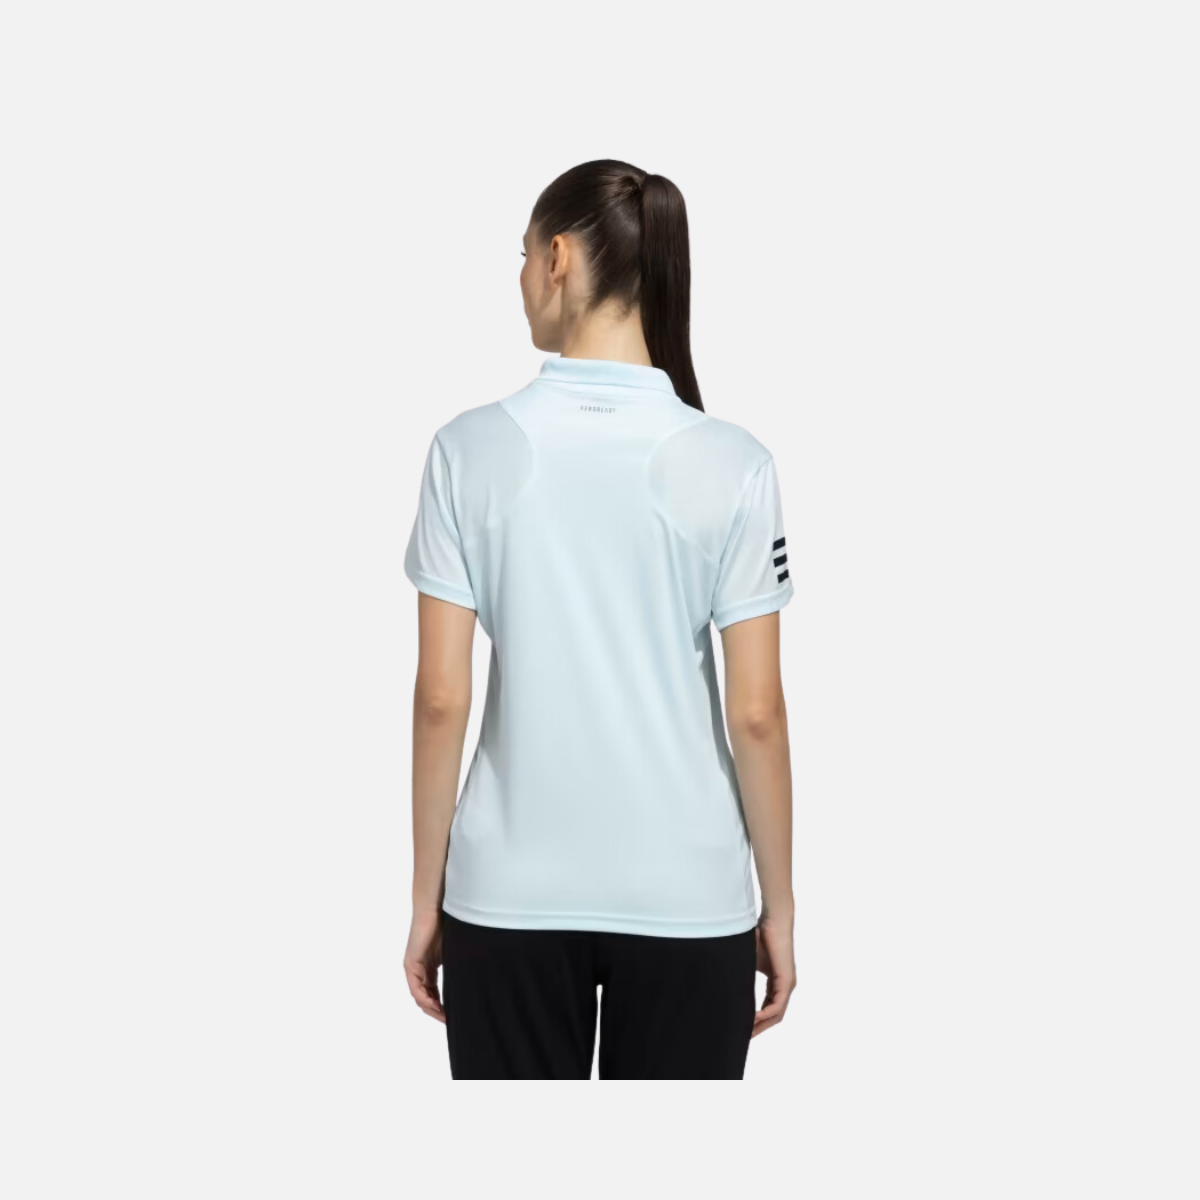 Adidas Club Polo Women's Tennis T-shirt -Almost Blue